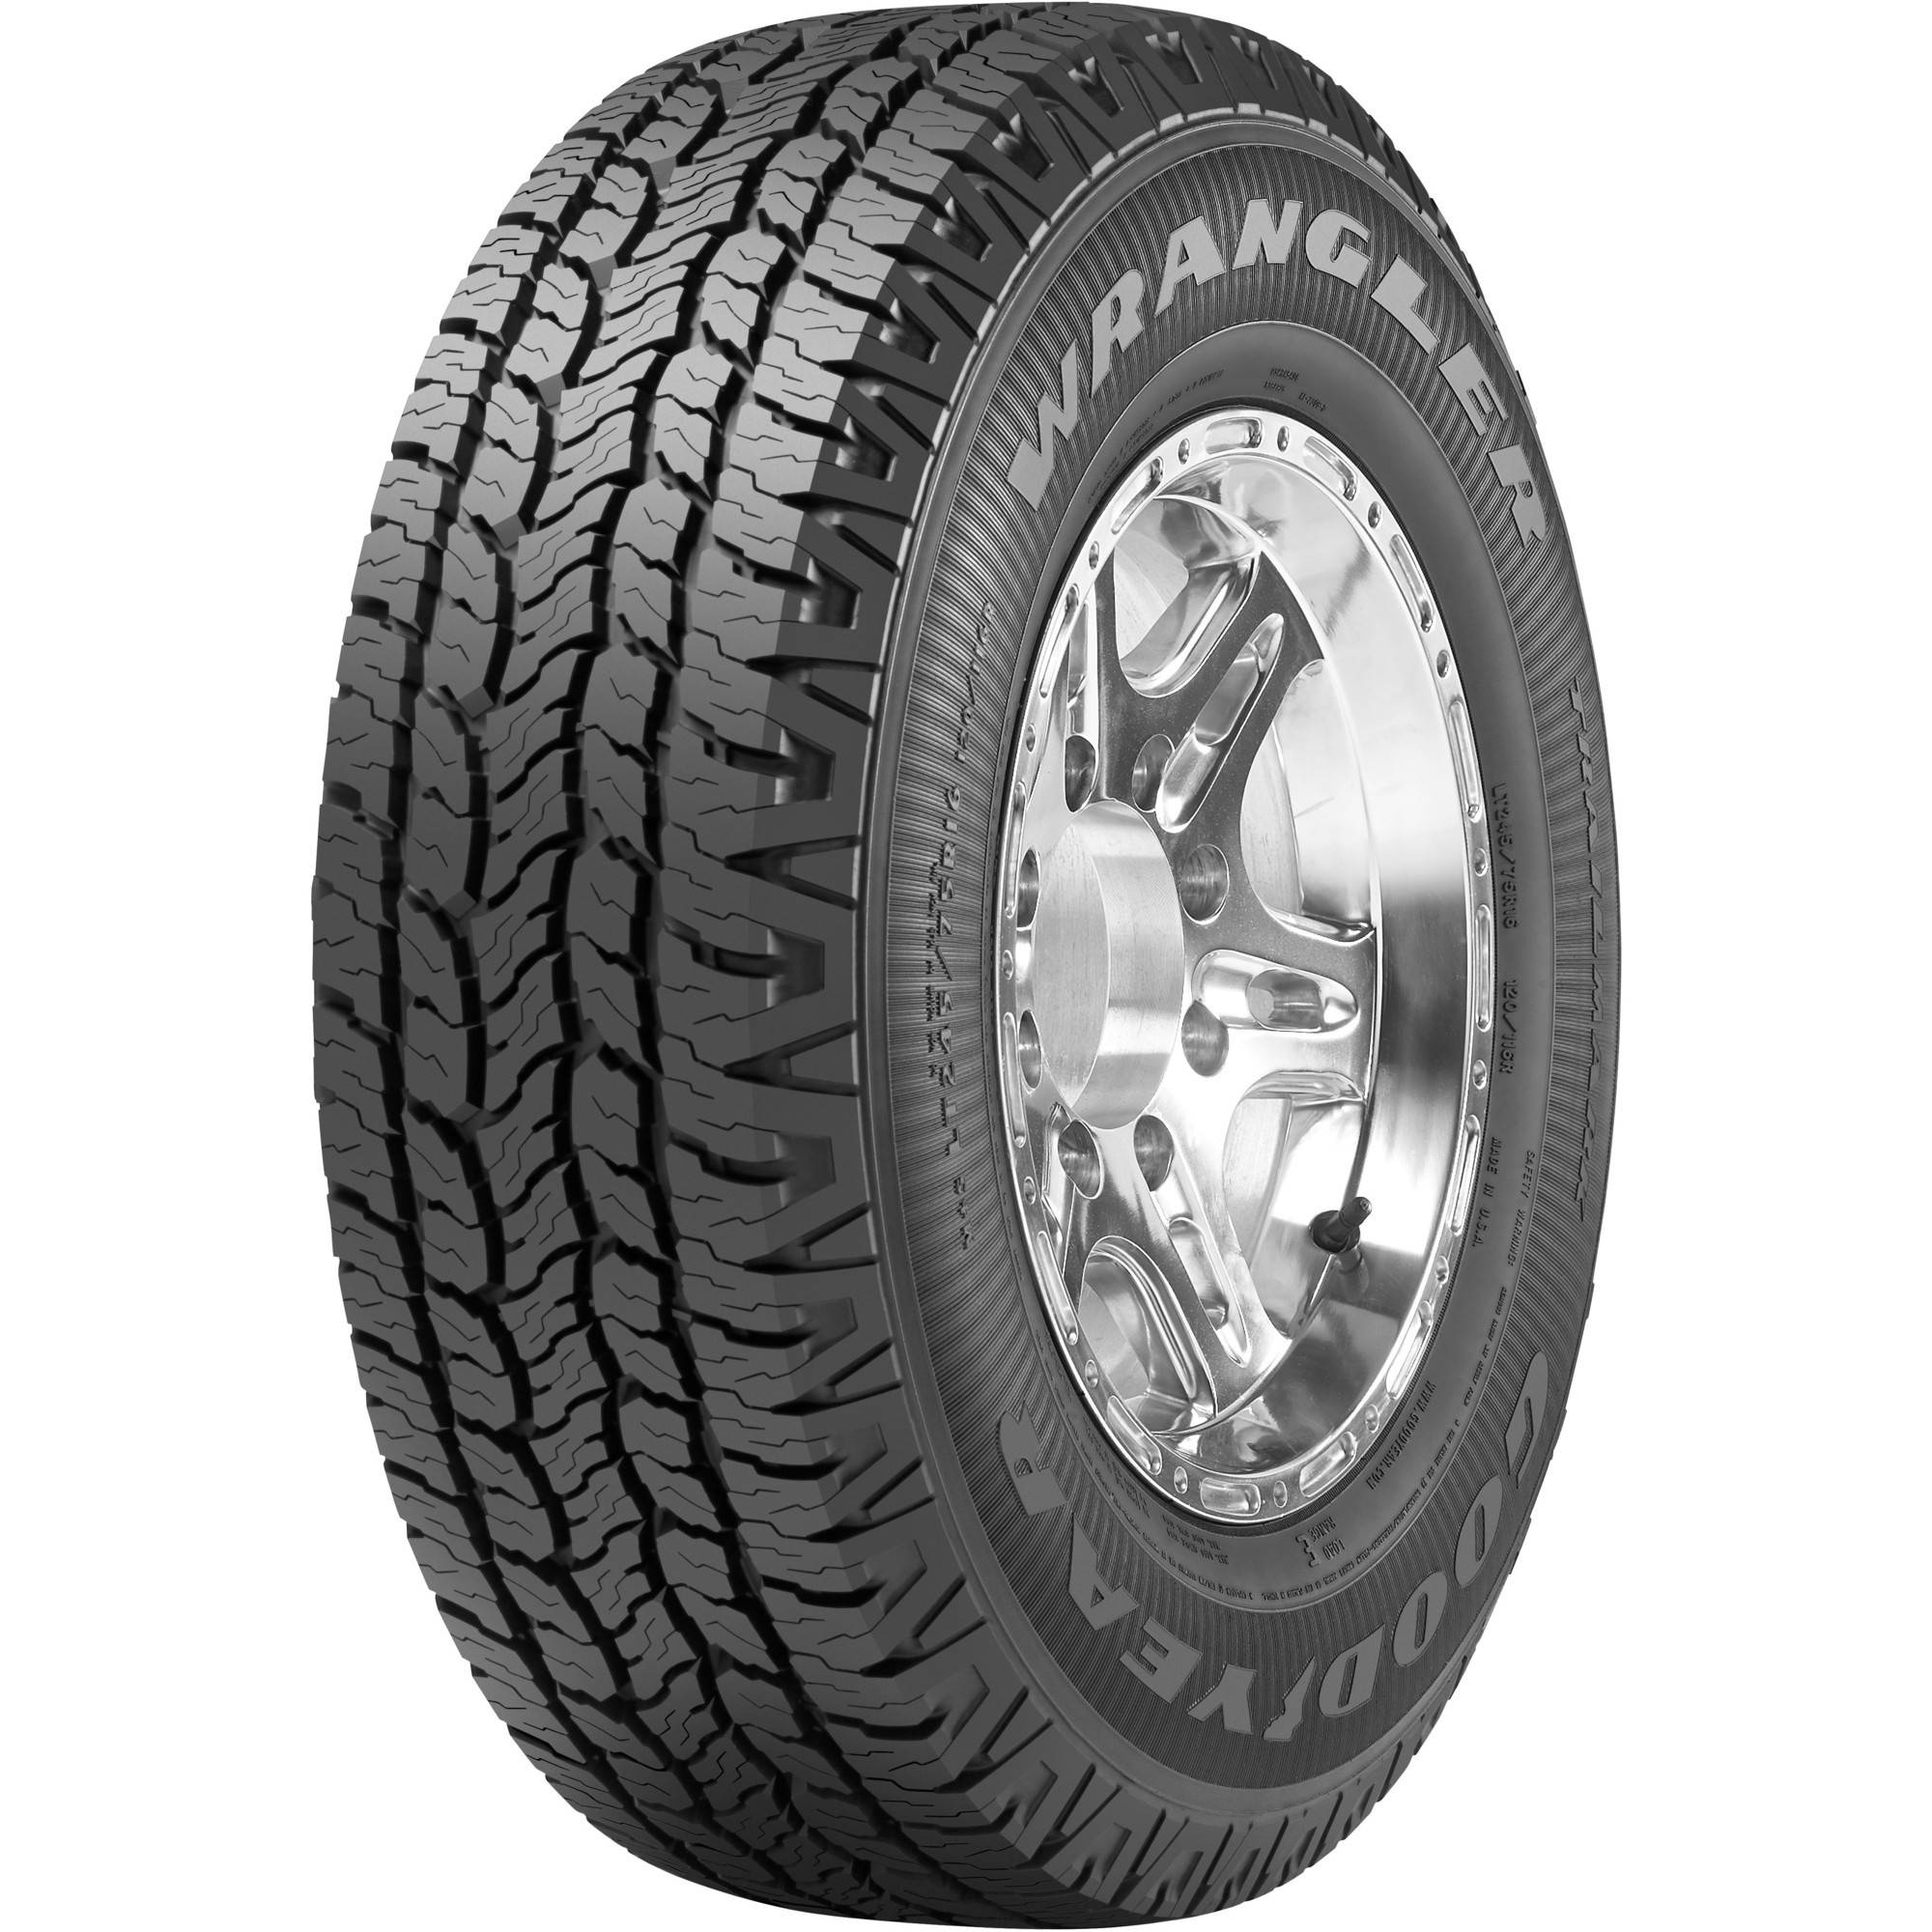 Goodyear Wrangler Trailmark Tire P245 65R17 105T Walmart 